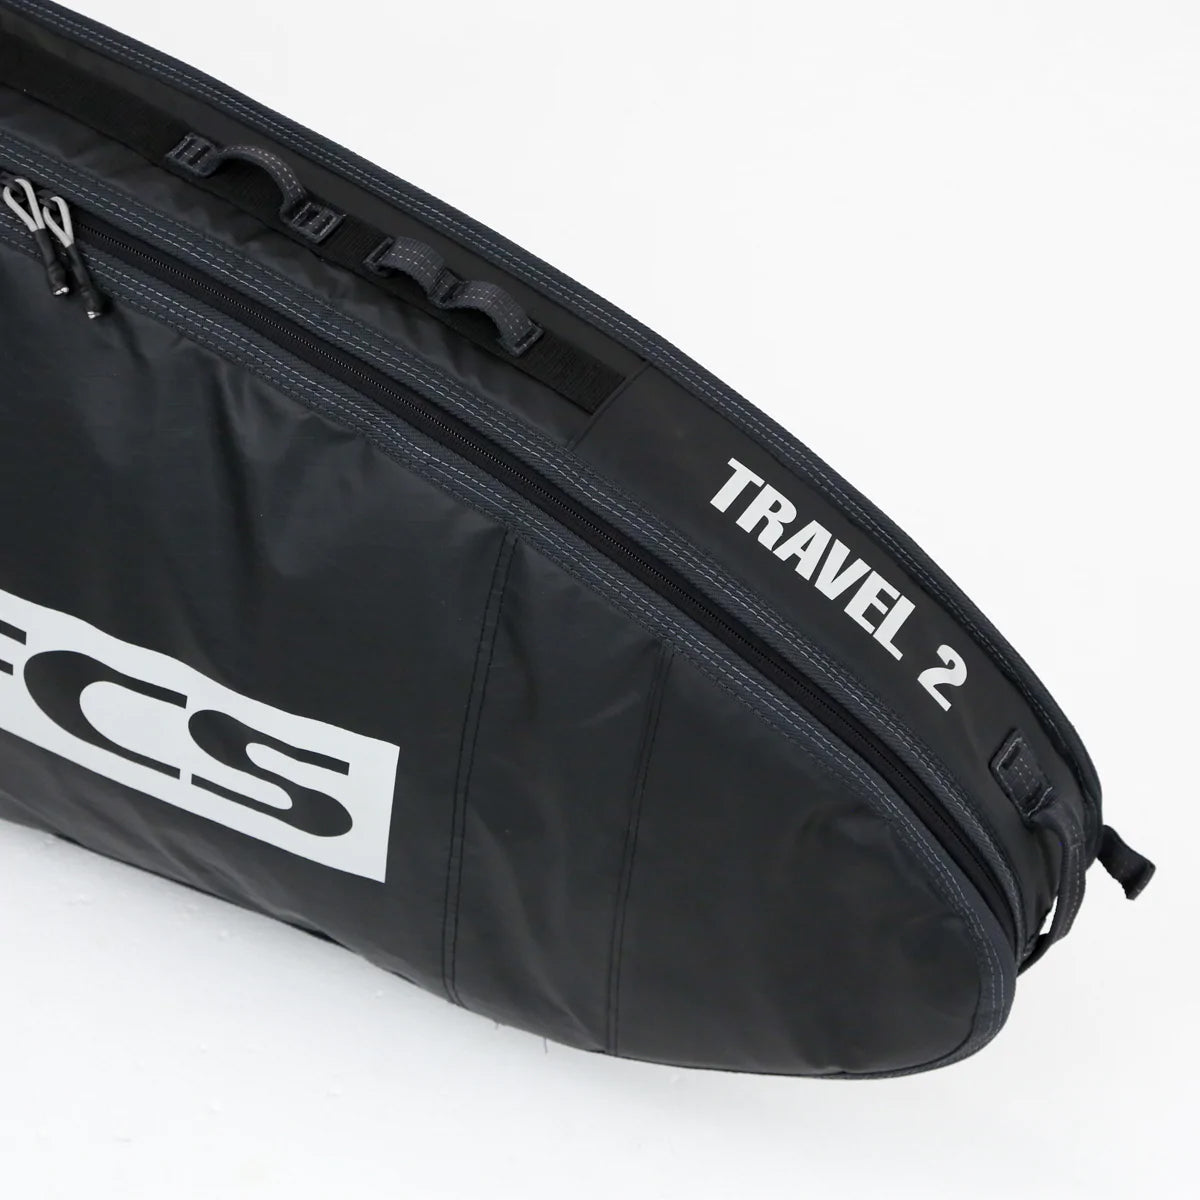 FCS 6'3" Travel 2 All PurposeBoard Bag